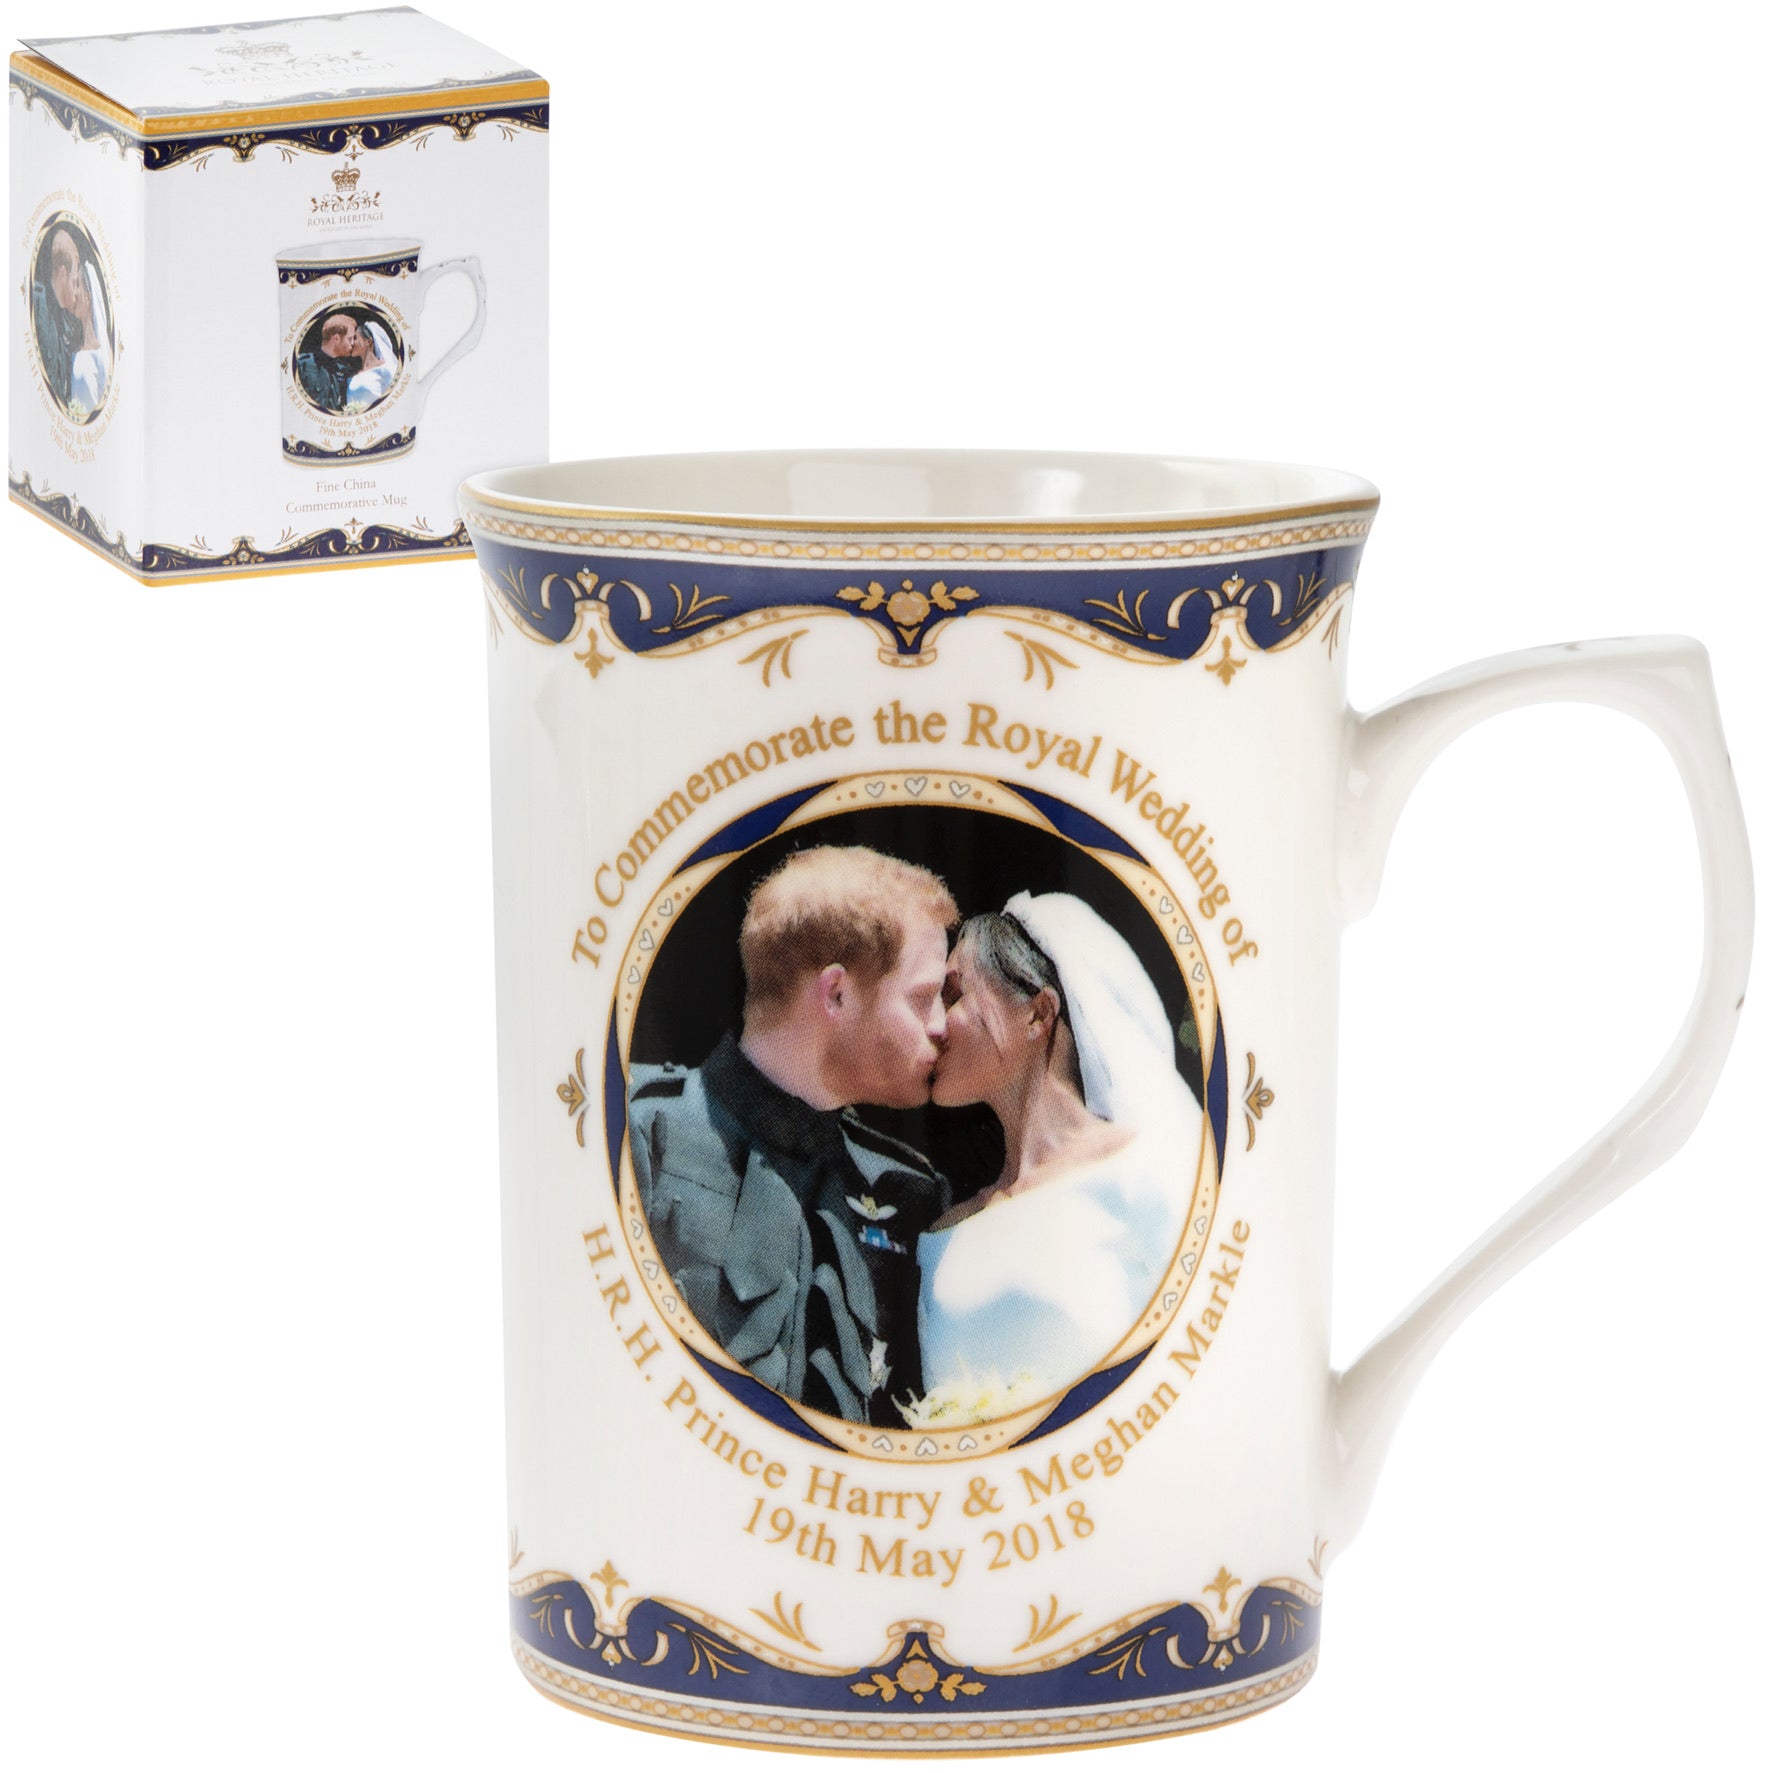 Royal Wedding Lap Tray Discount When Buying a Royal Wedding First Kiss Mug